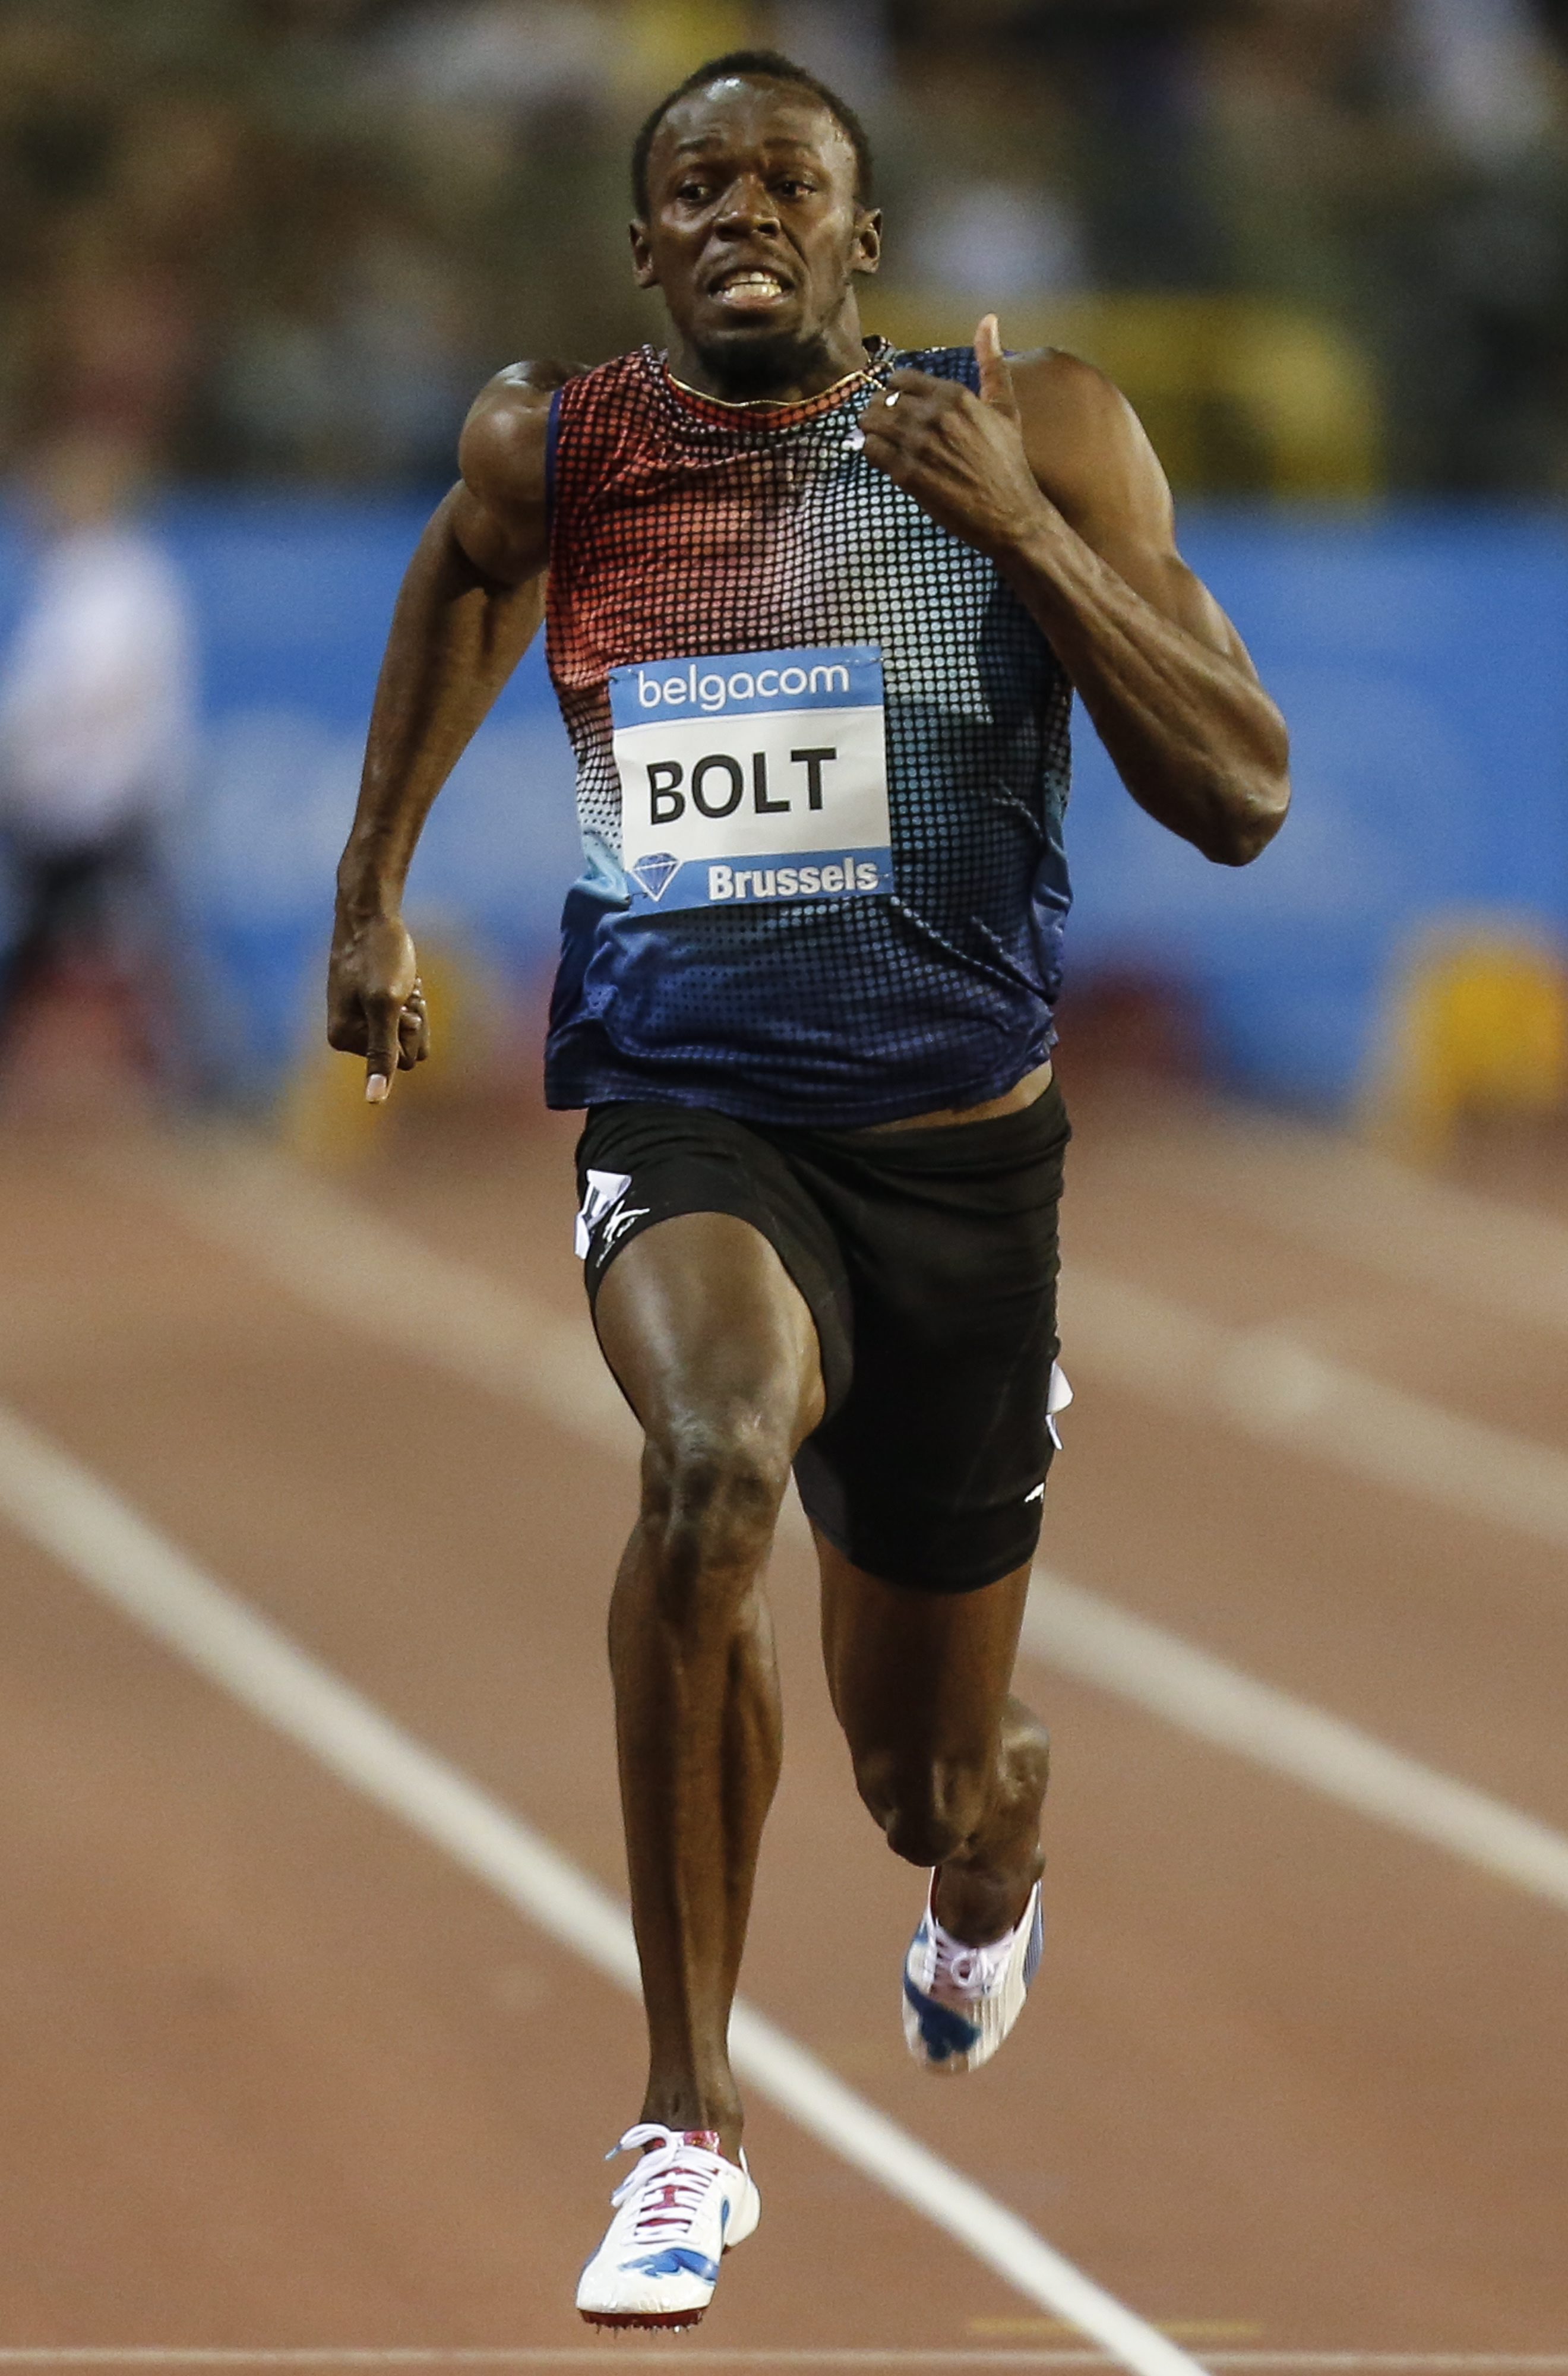 Болт спечели спринта на 100 метра на Диамантената лига